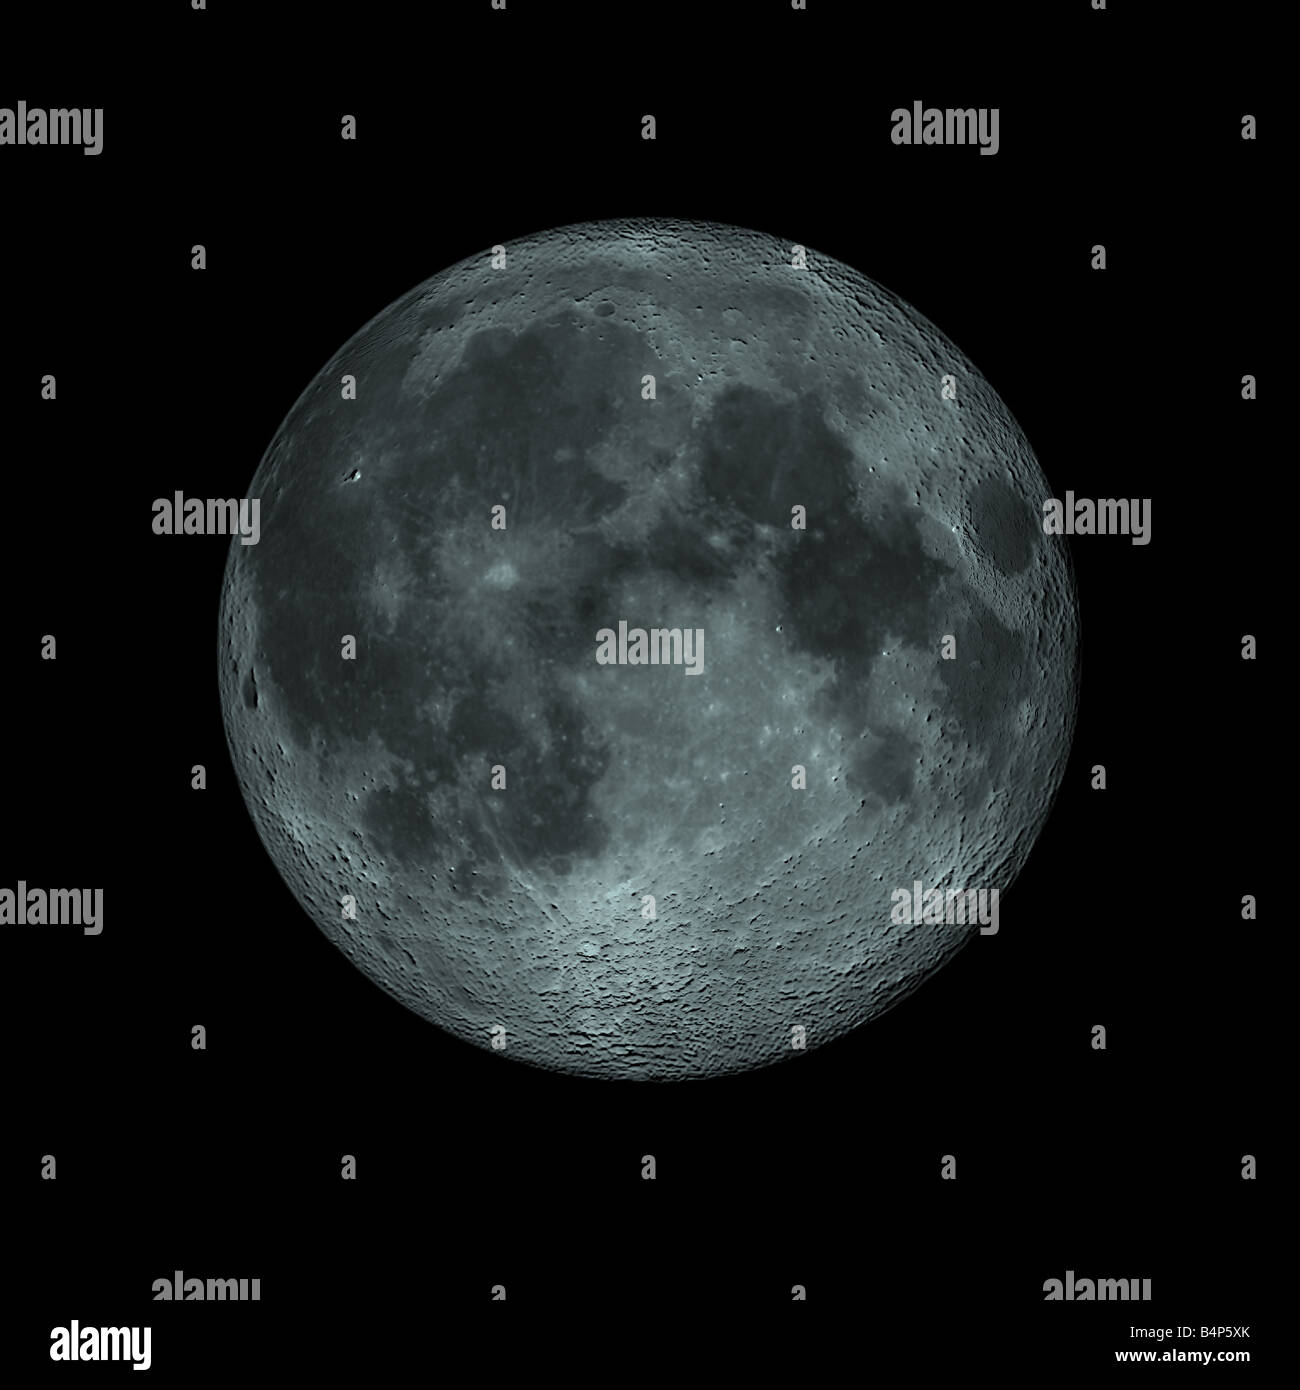 Fictional moon image Stock Photo